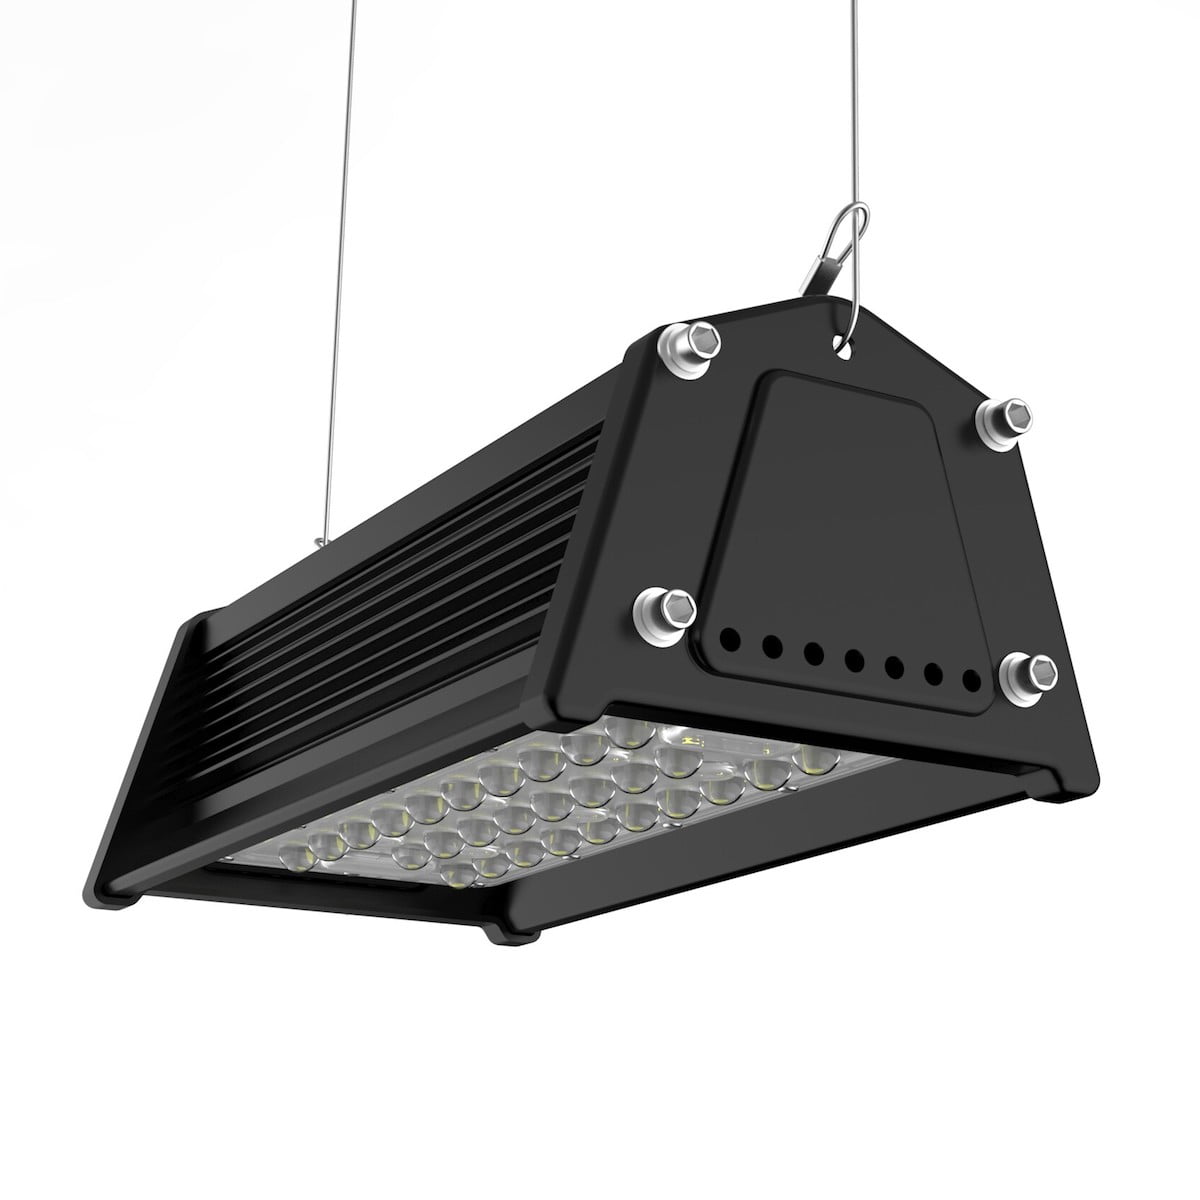 vorlane リニアハイベイ LED ライトの製品イメージ